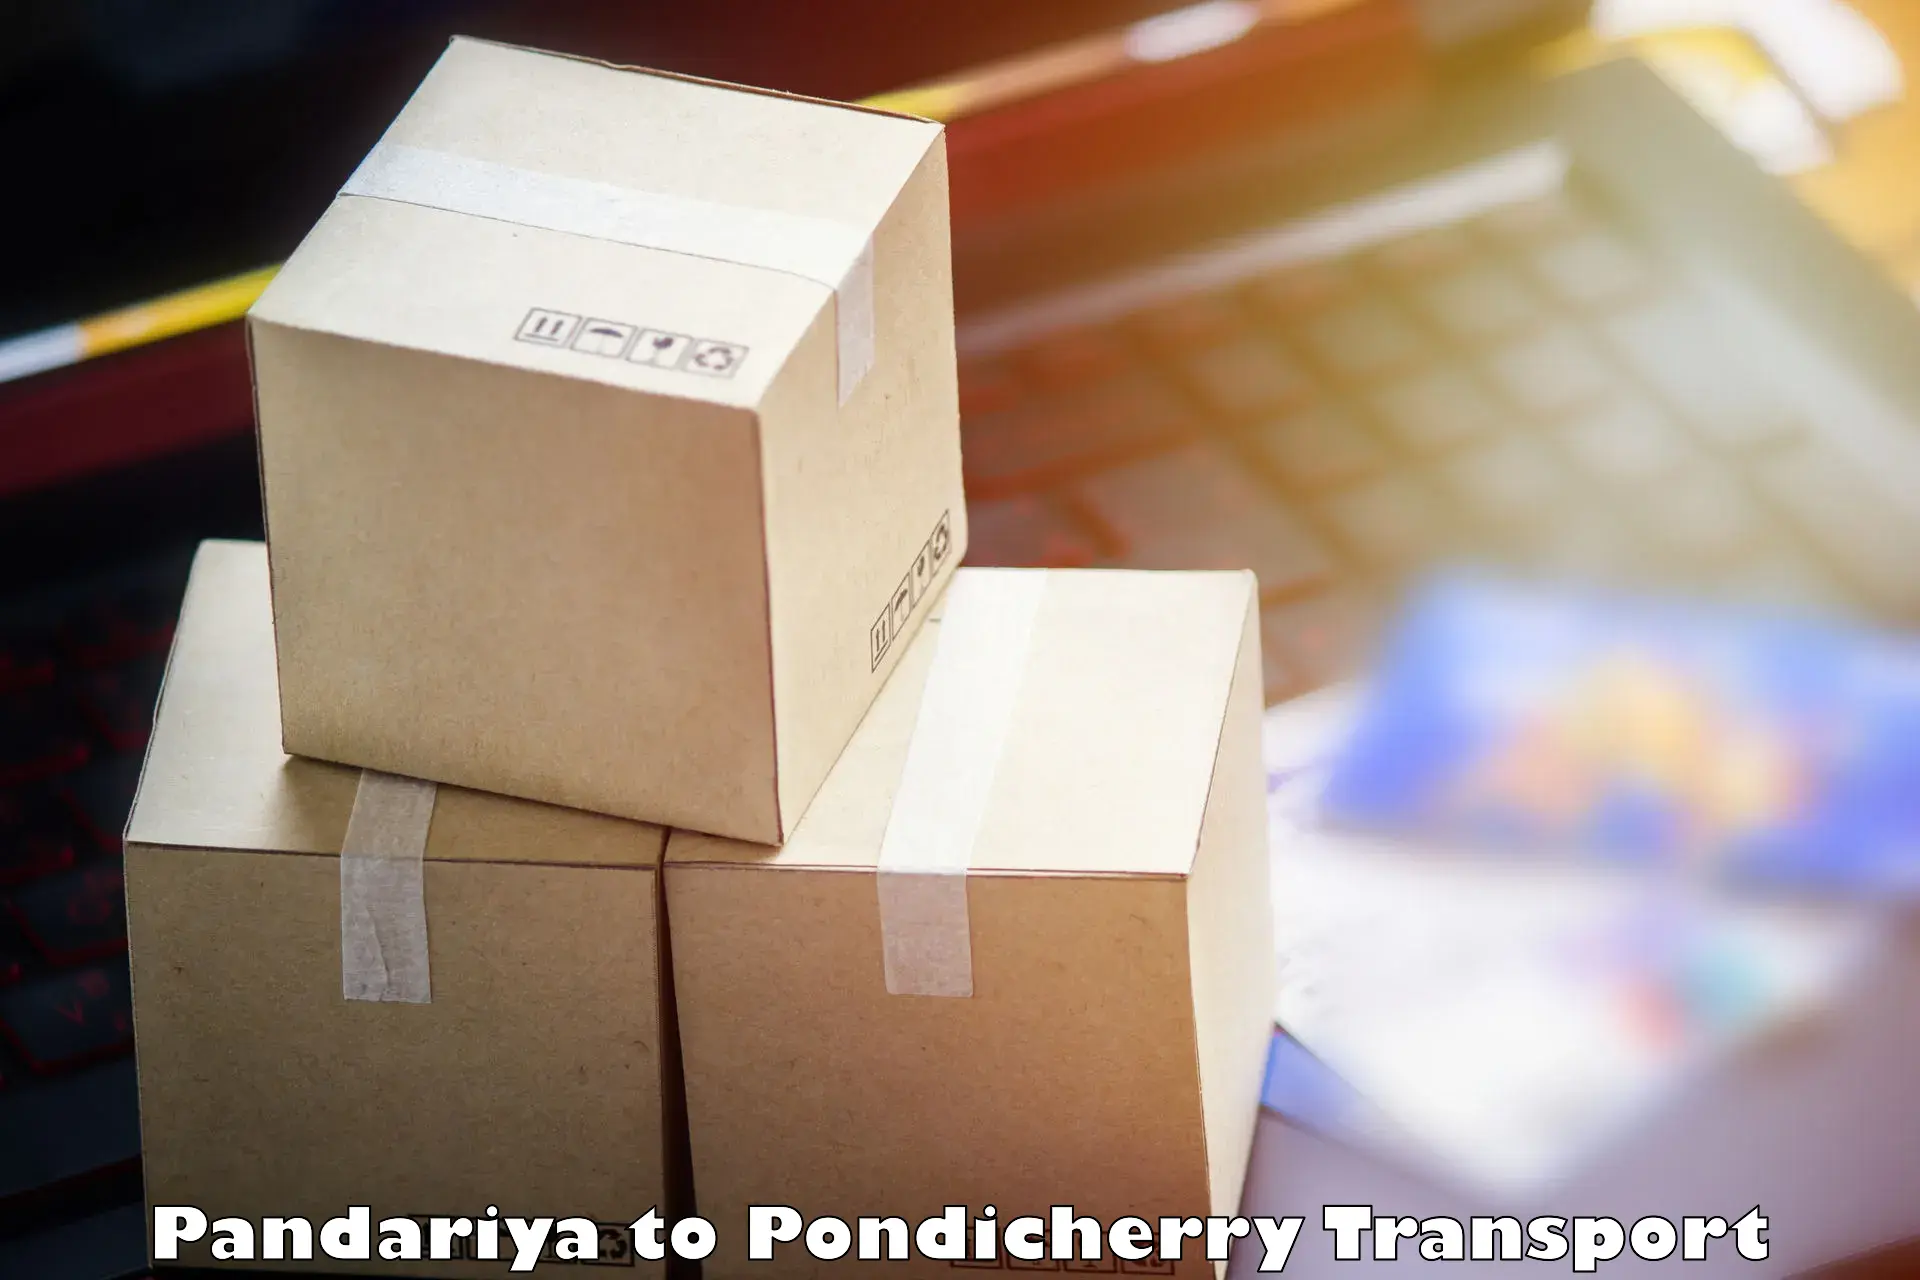 Nearby transport service Pandariya to Pondicherry